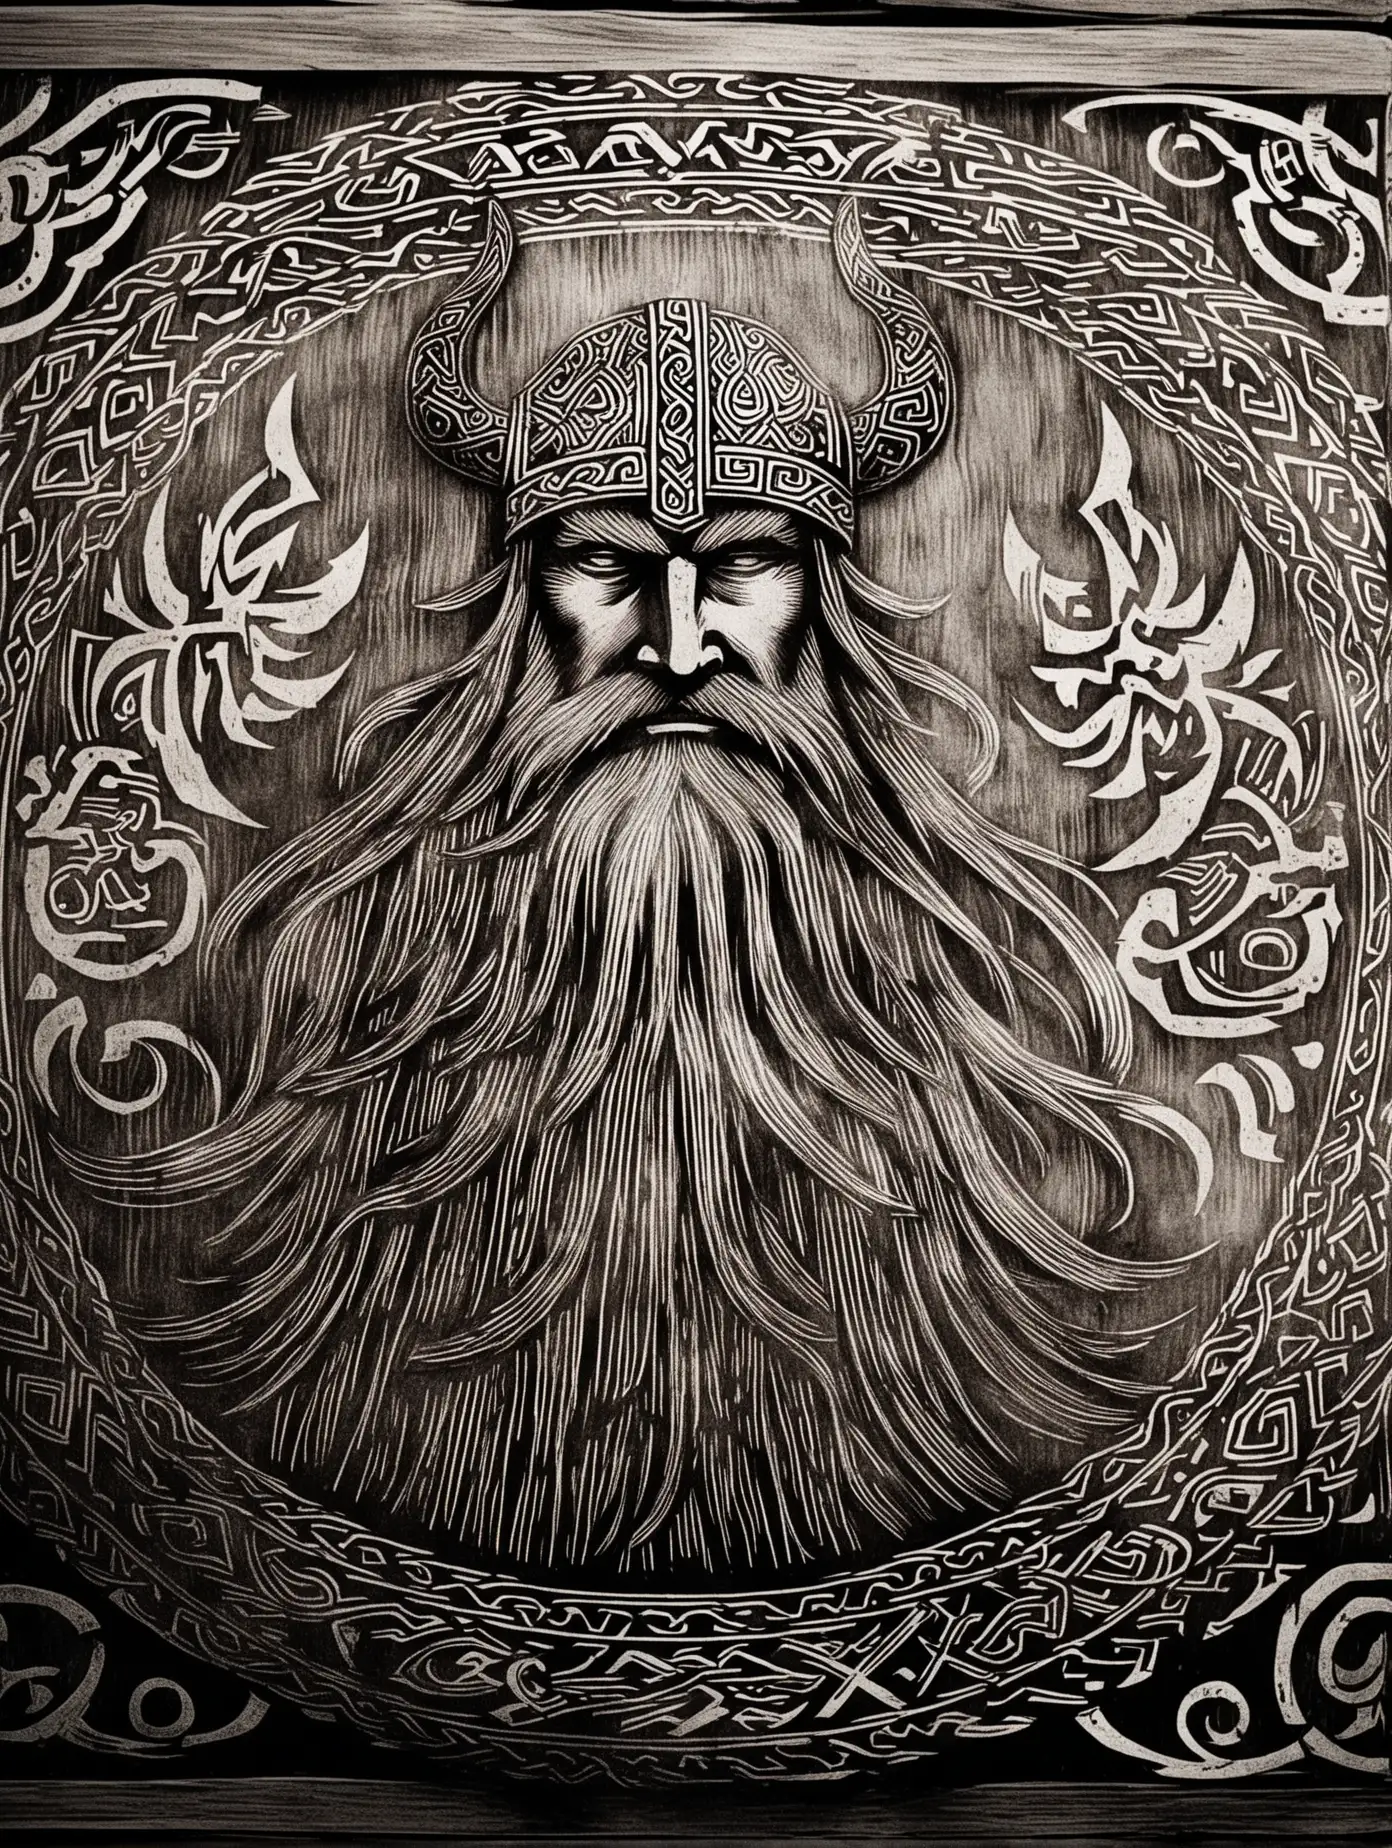 Ancient Viking Engraving Artwork Depicting Warrior in Battle